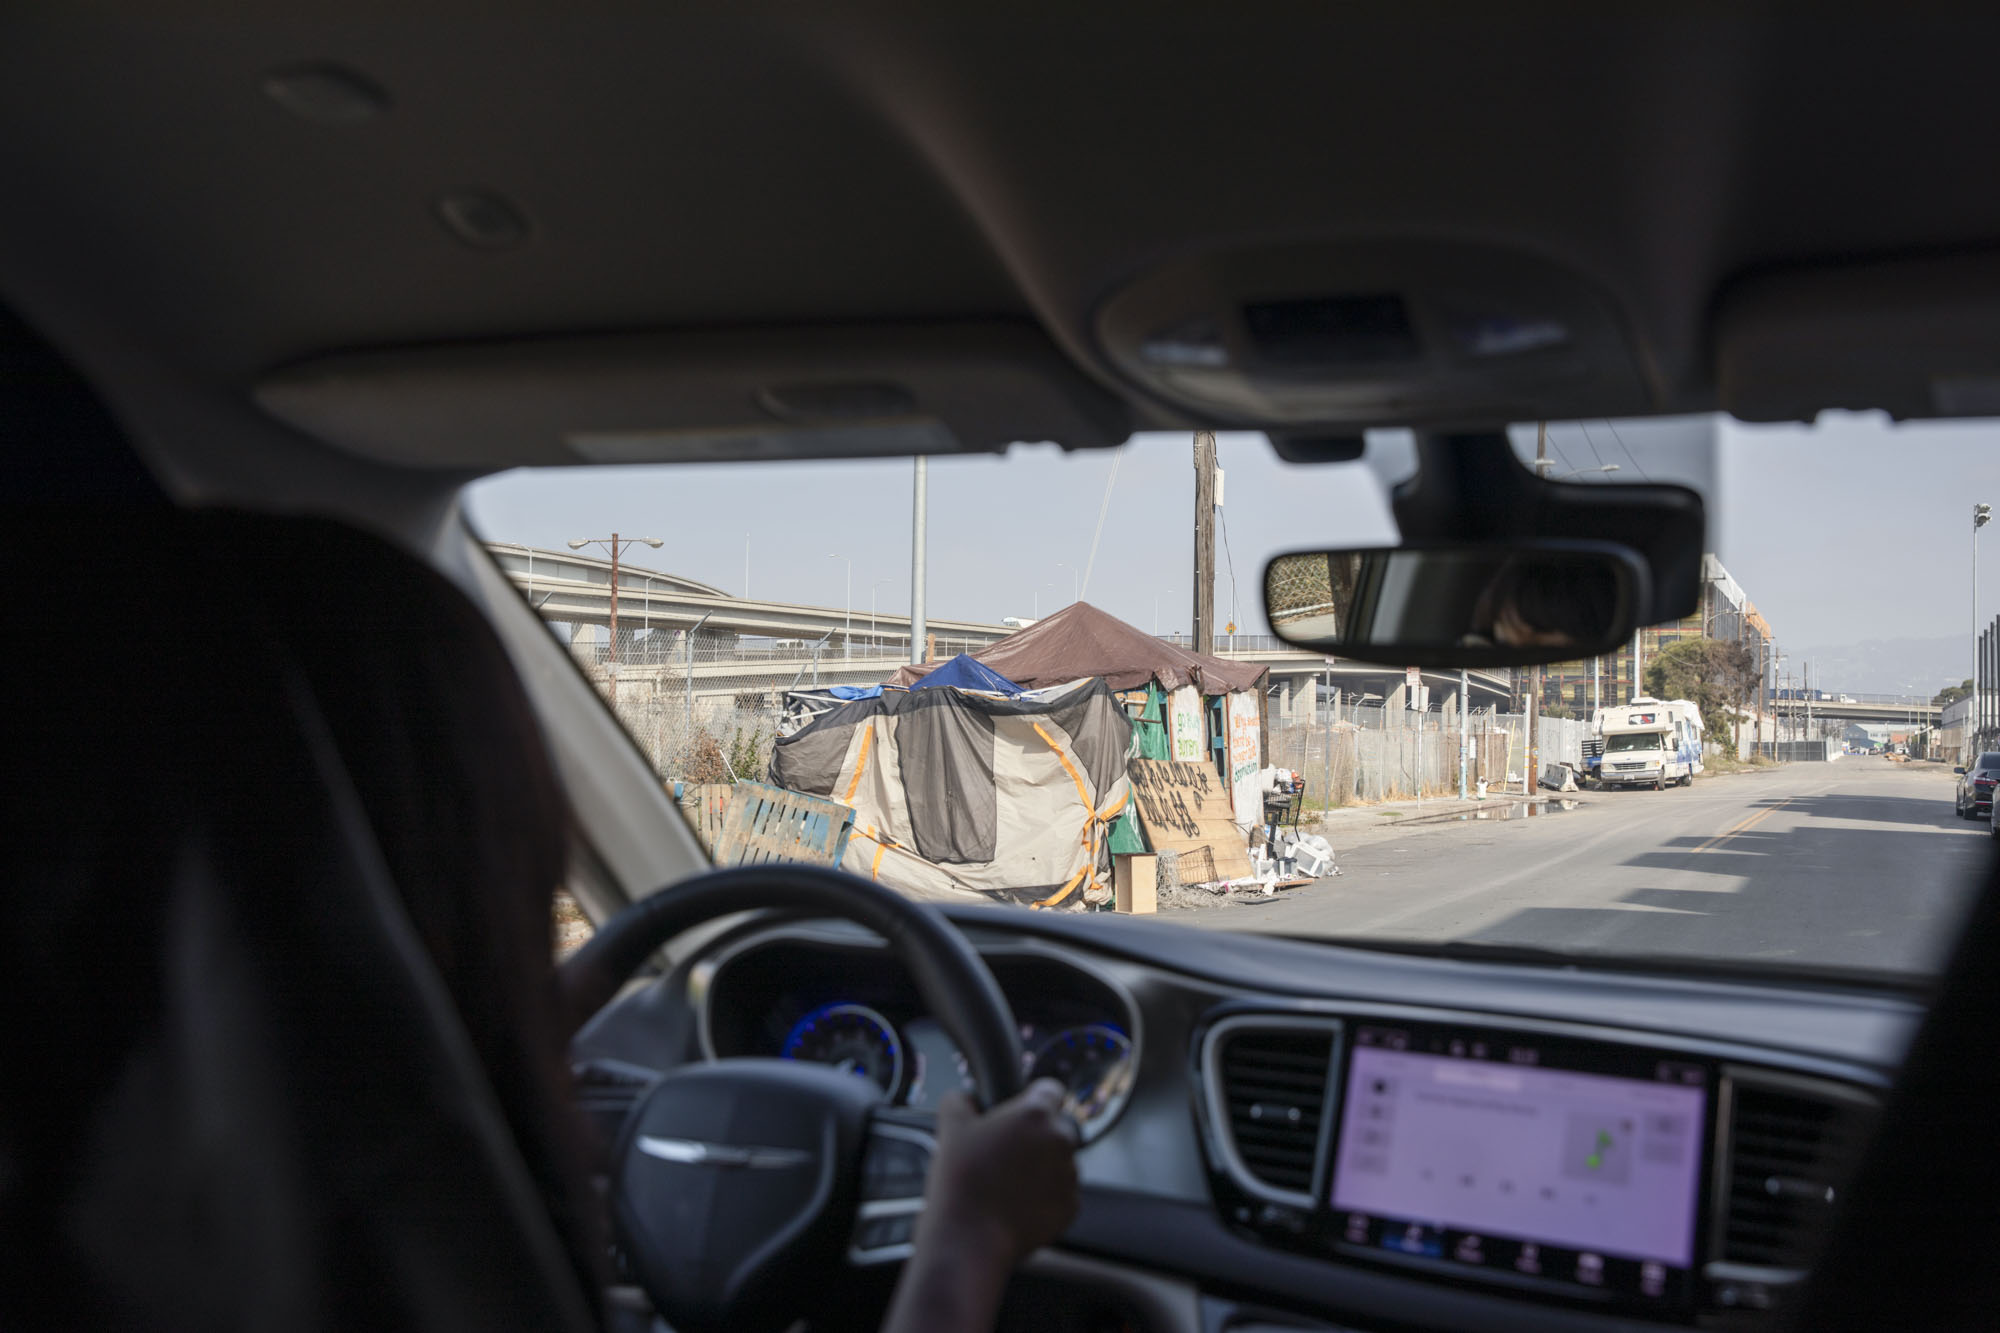 A homeless encampment is seen through the windshield of a car.